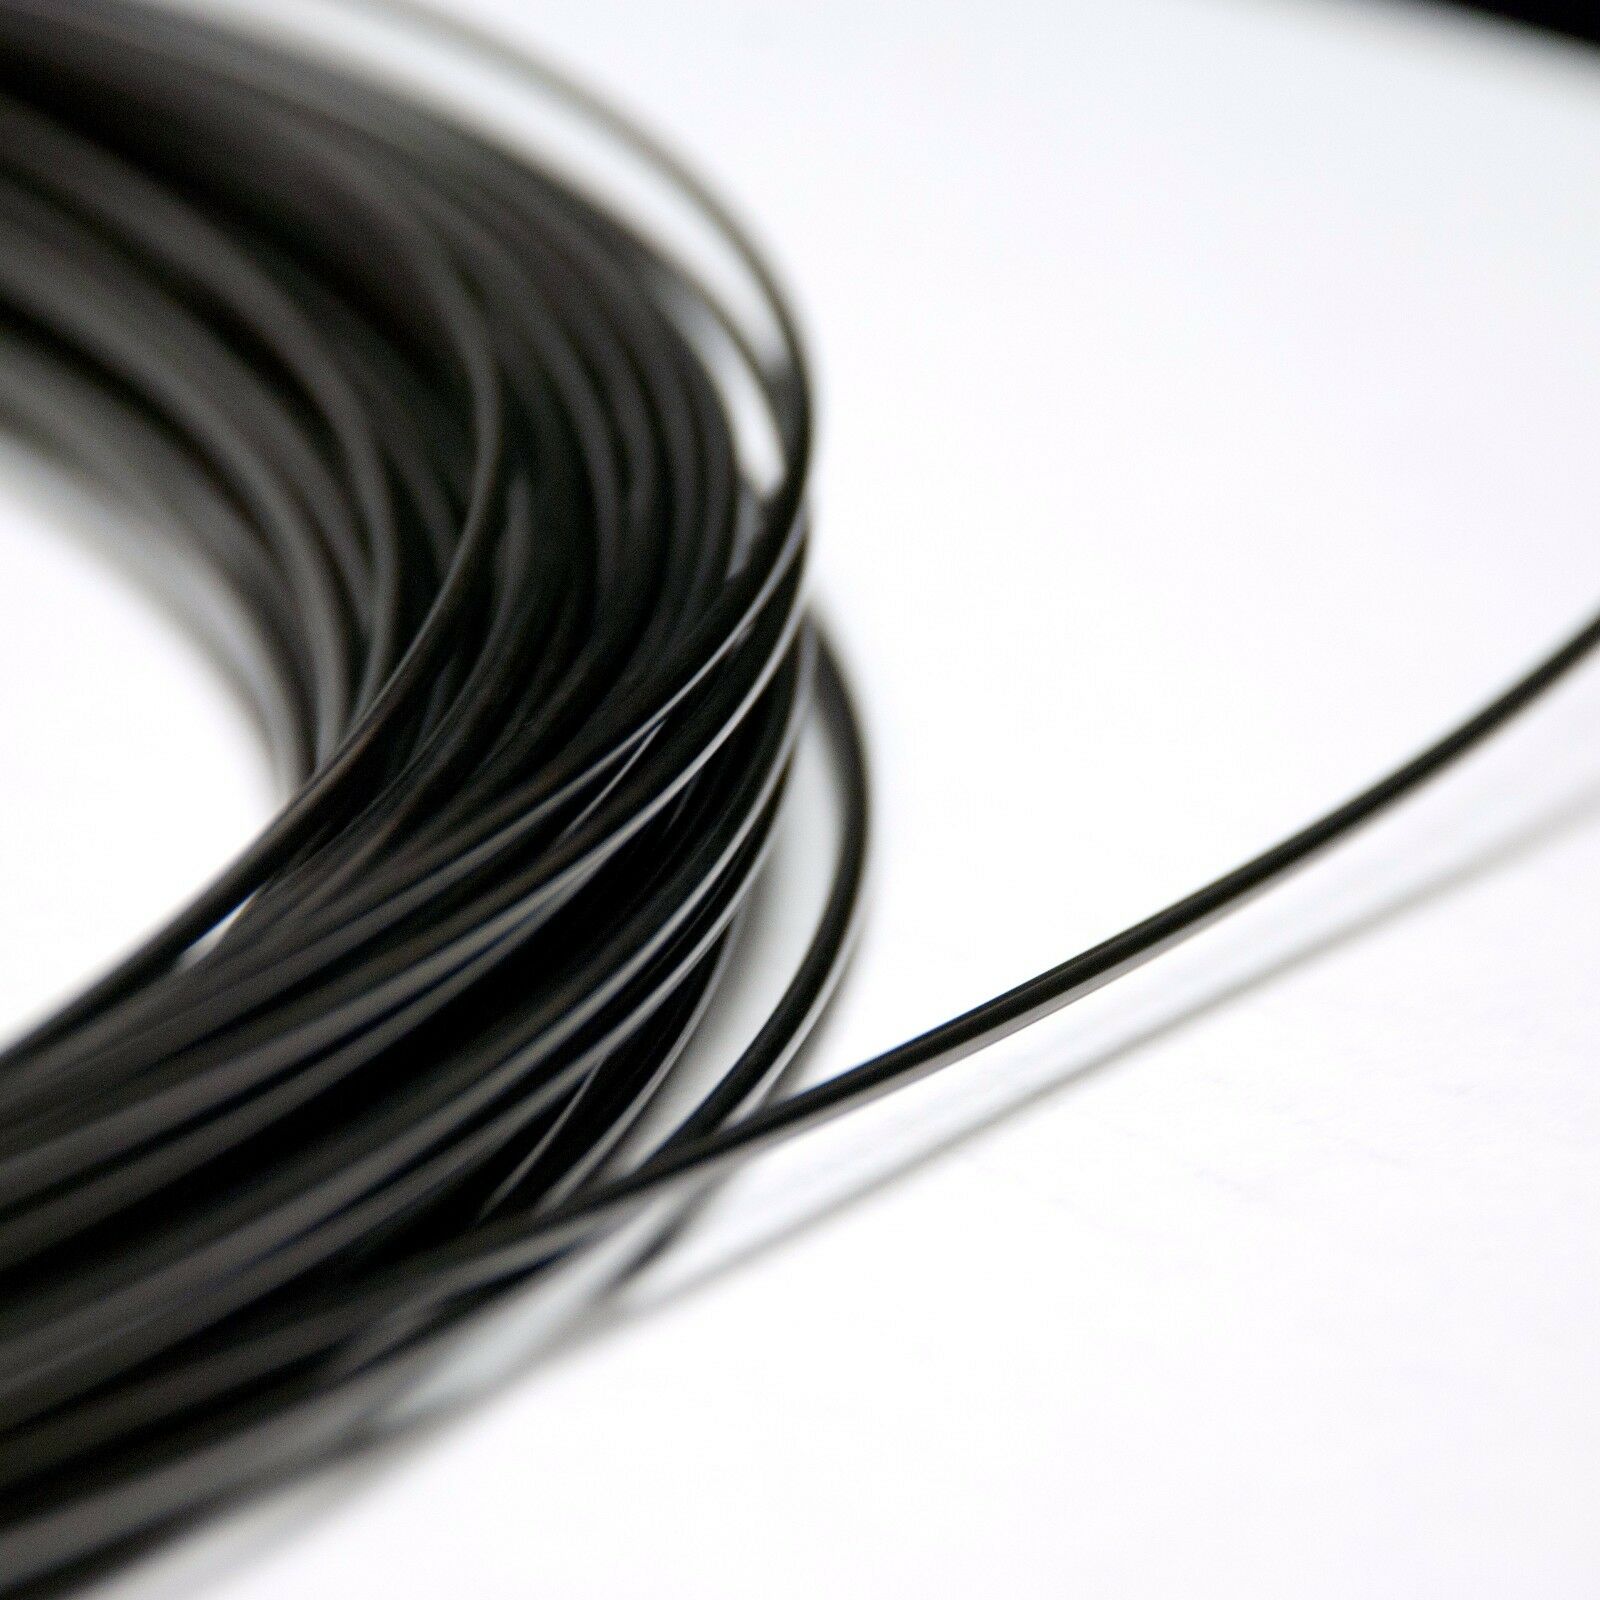 NiTi Nitinol magic wire SMA shape memory alloy 0.5-2mm; 15-80ºC (59-176ºF)